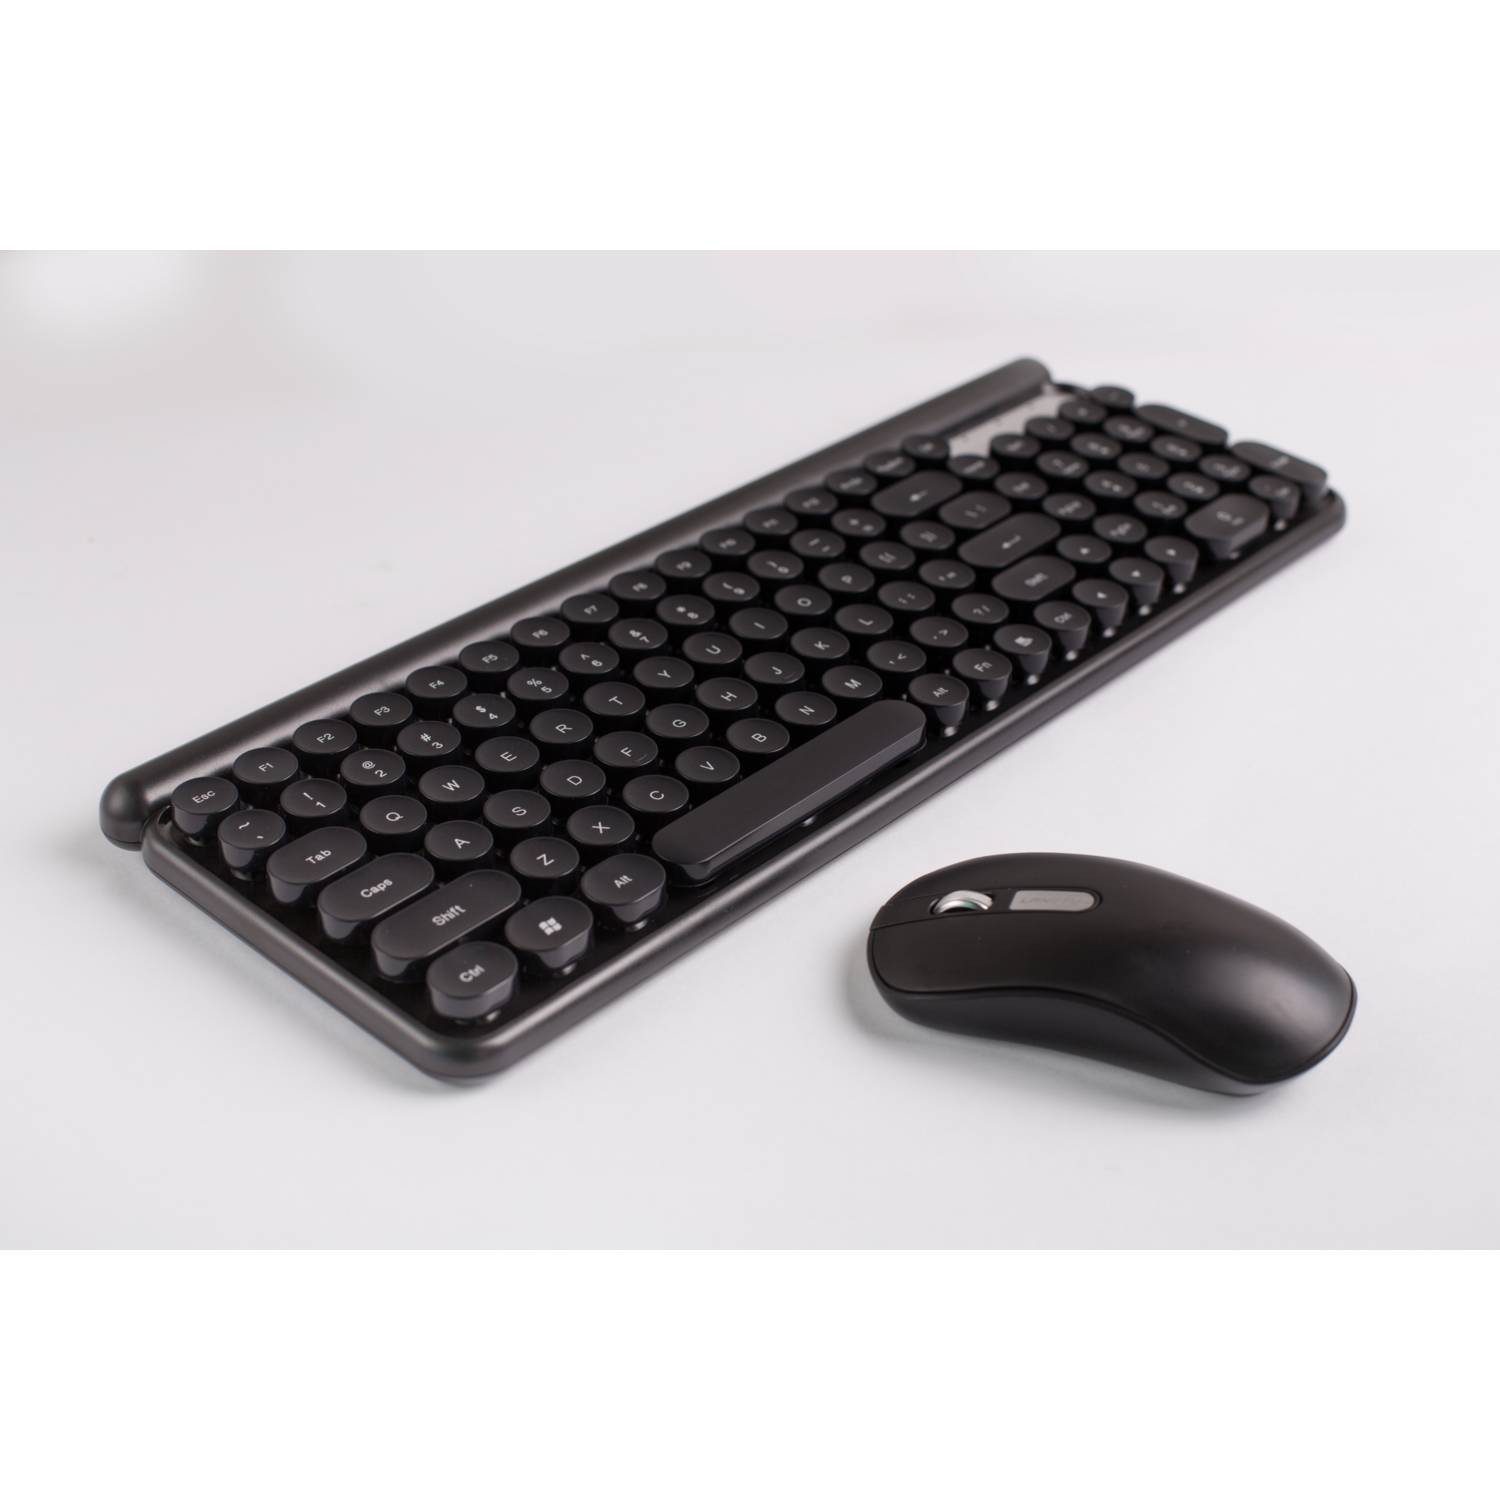 Teclado Retro Mecánico Keyboard mouse Color Negro GENERICO |